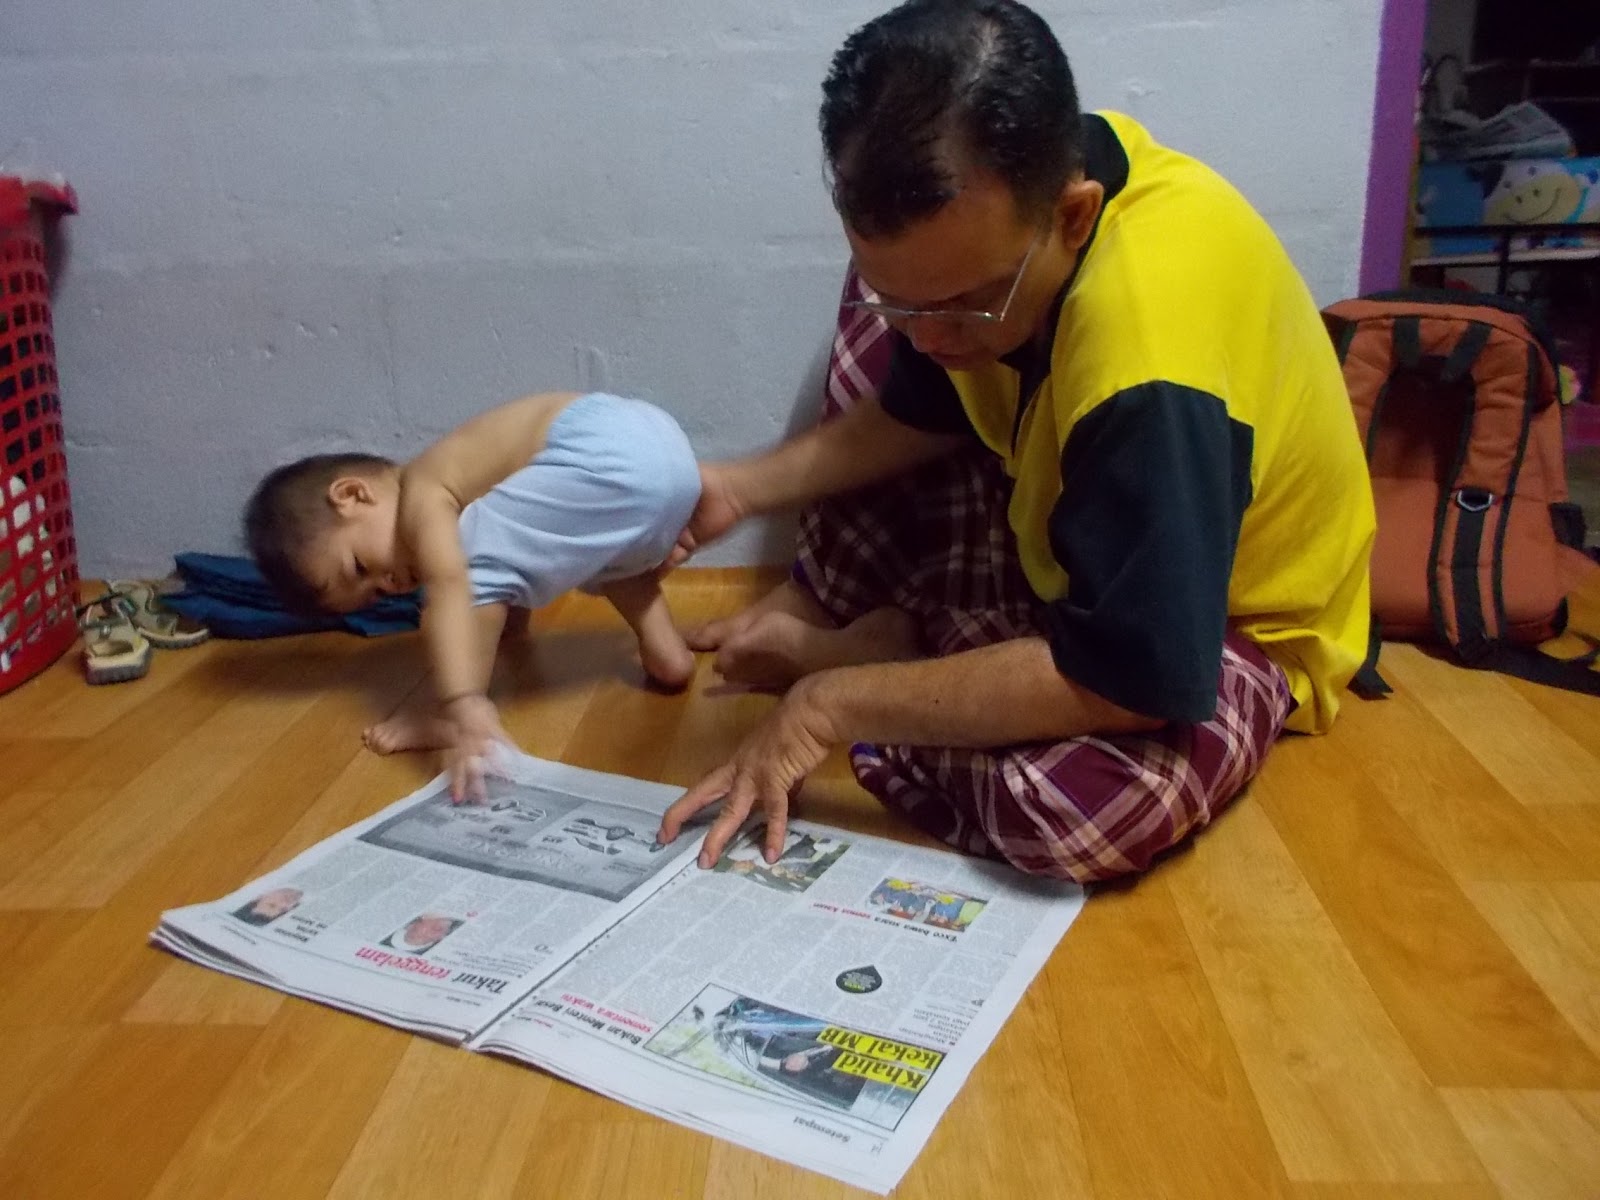 Bapa Membaca Surat Khabar In Luang Damur